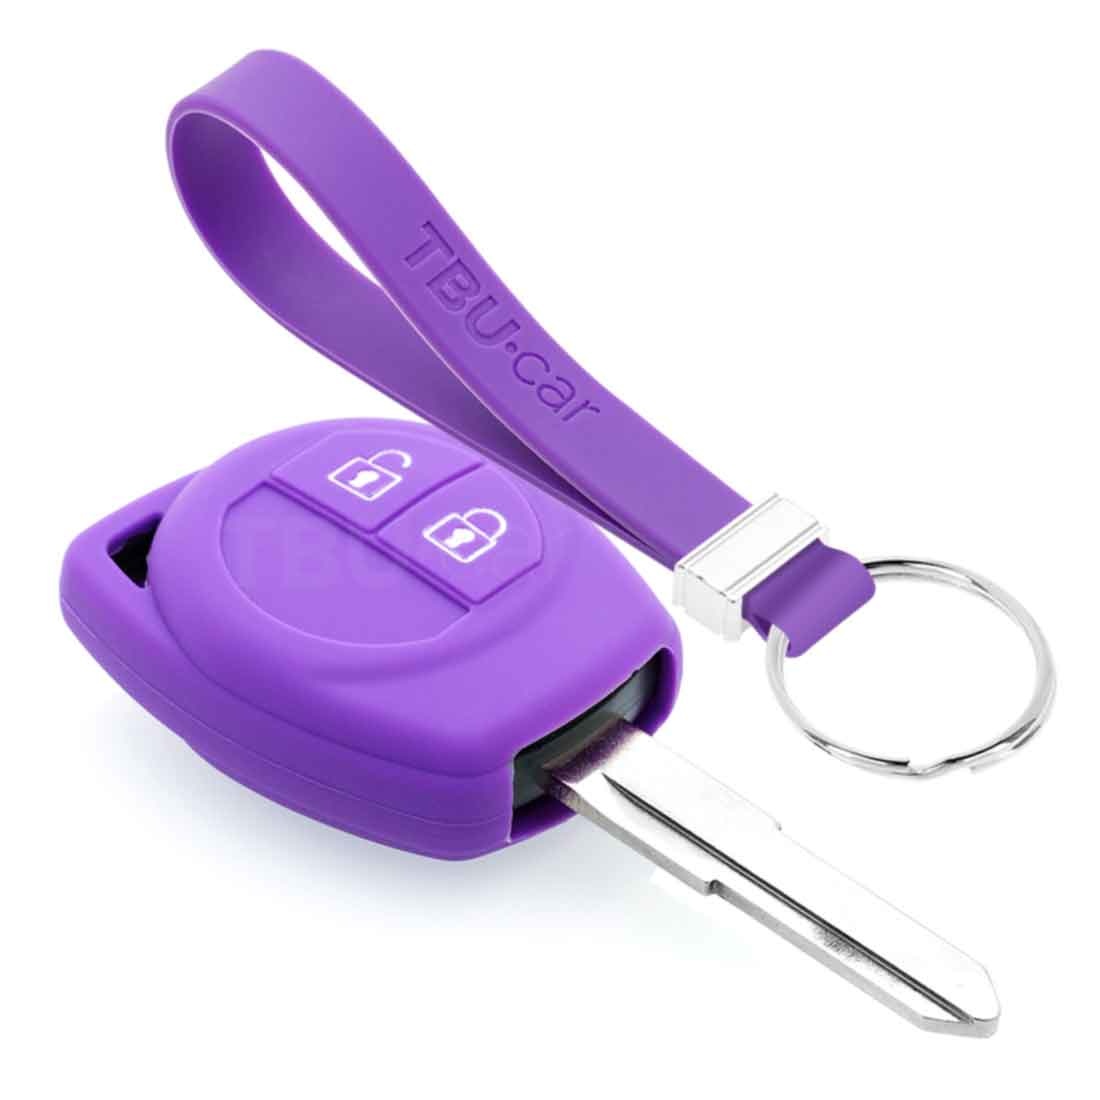 TBU car TBU car Car key cover compatible with Opel - Silicone Protective Remote Key Shell - FOB Case Cover - Purple